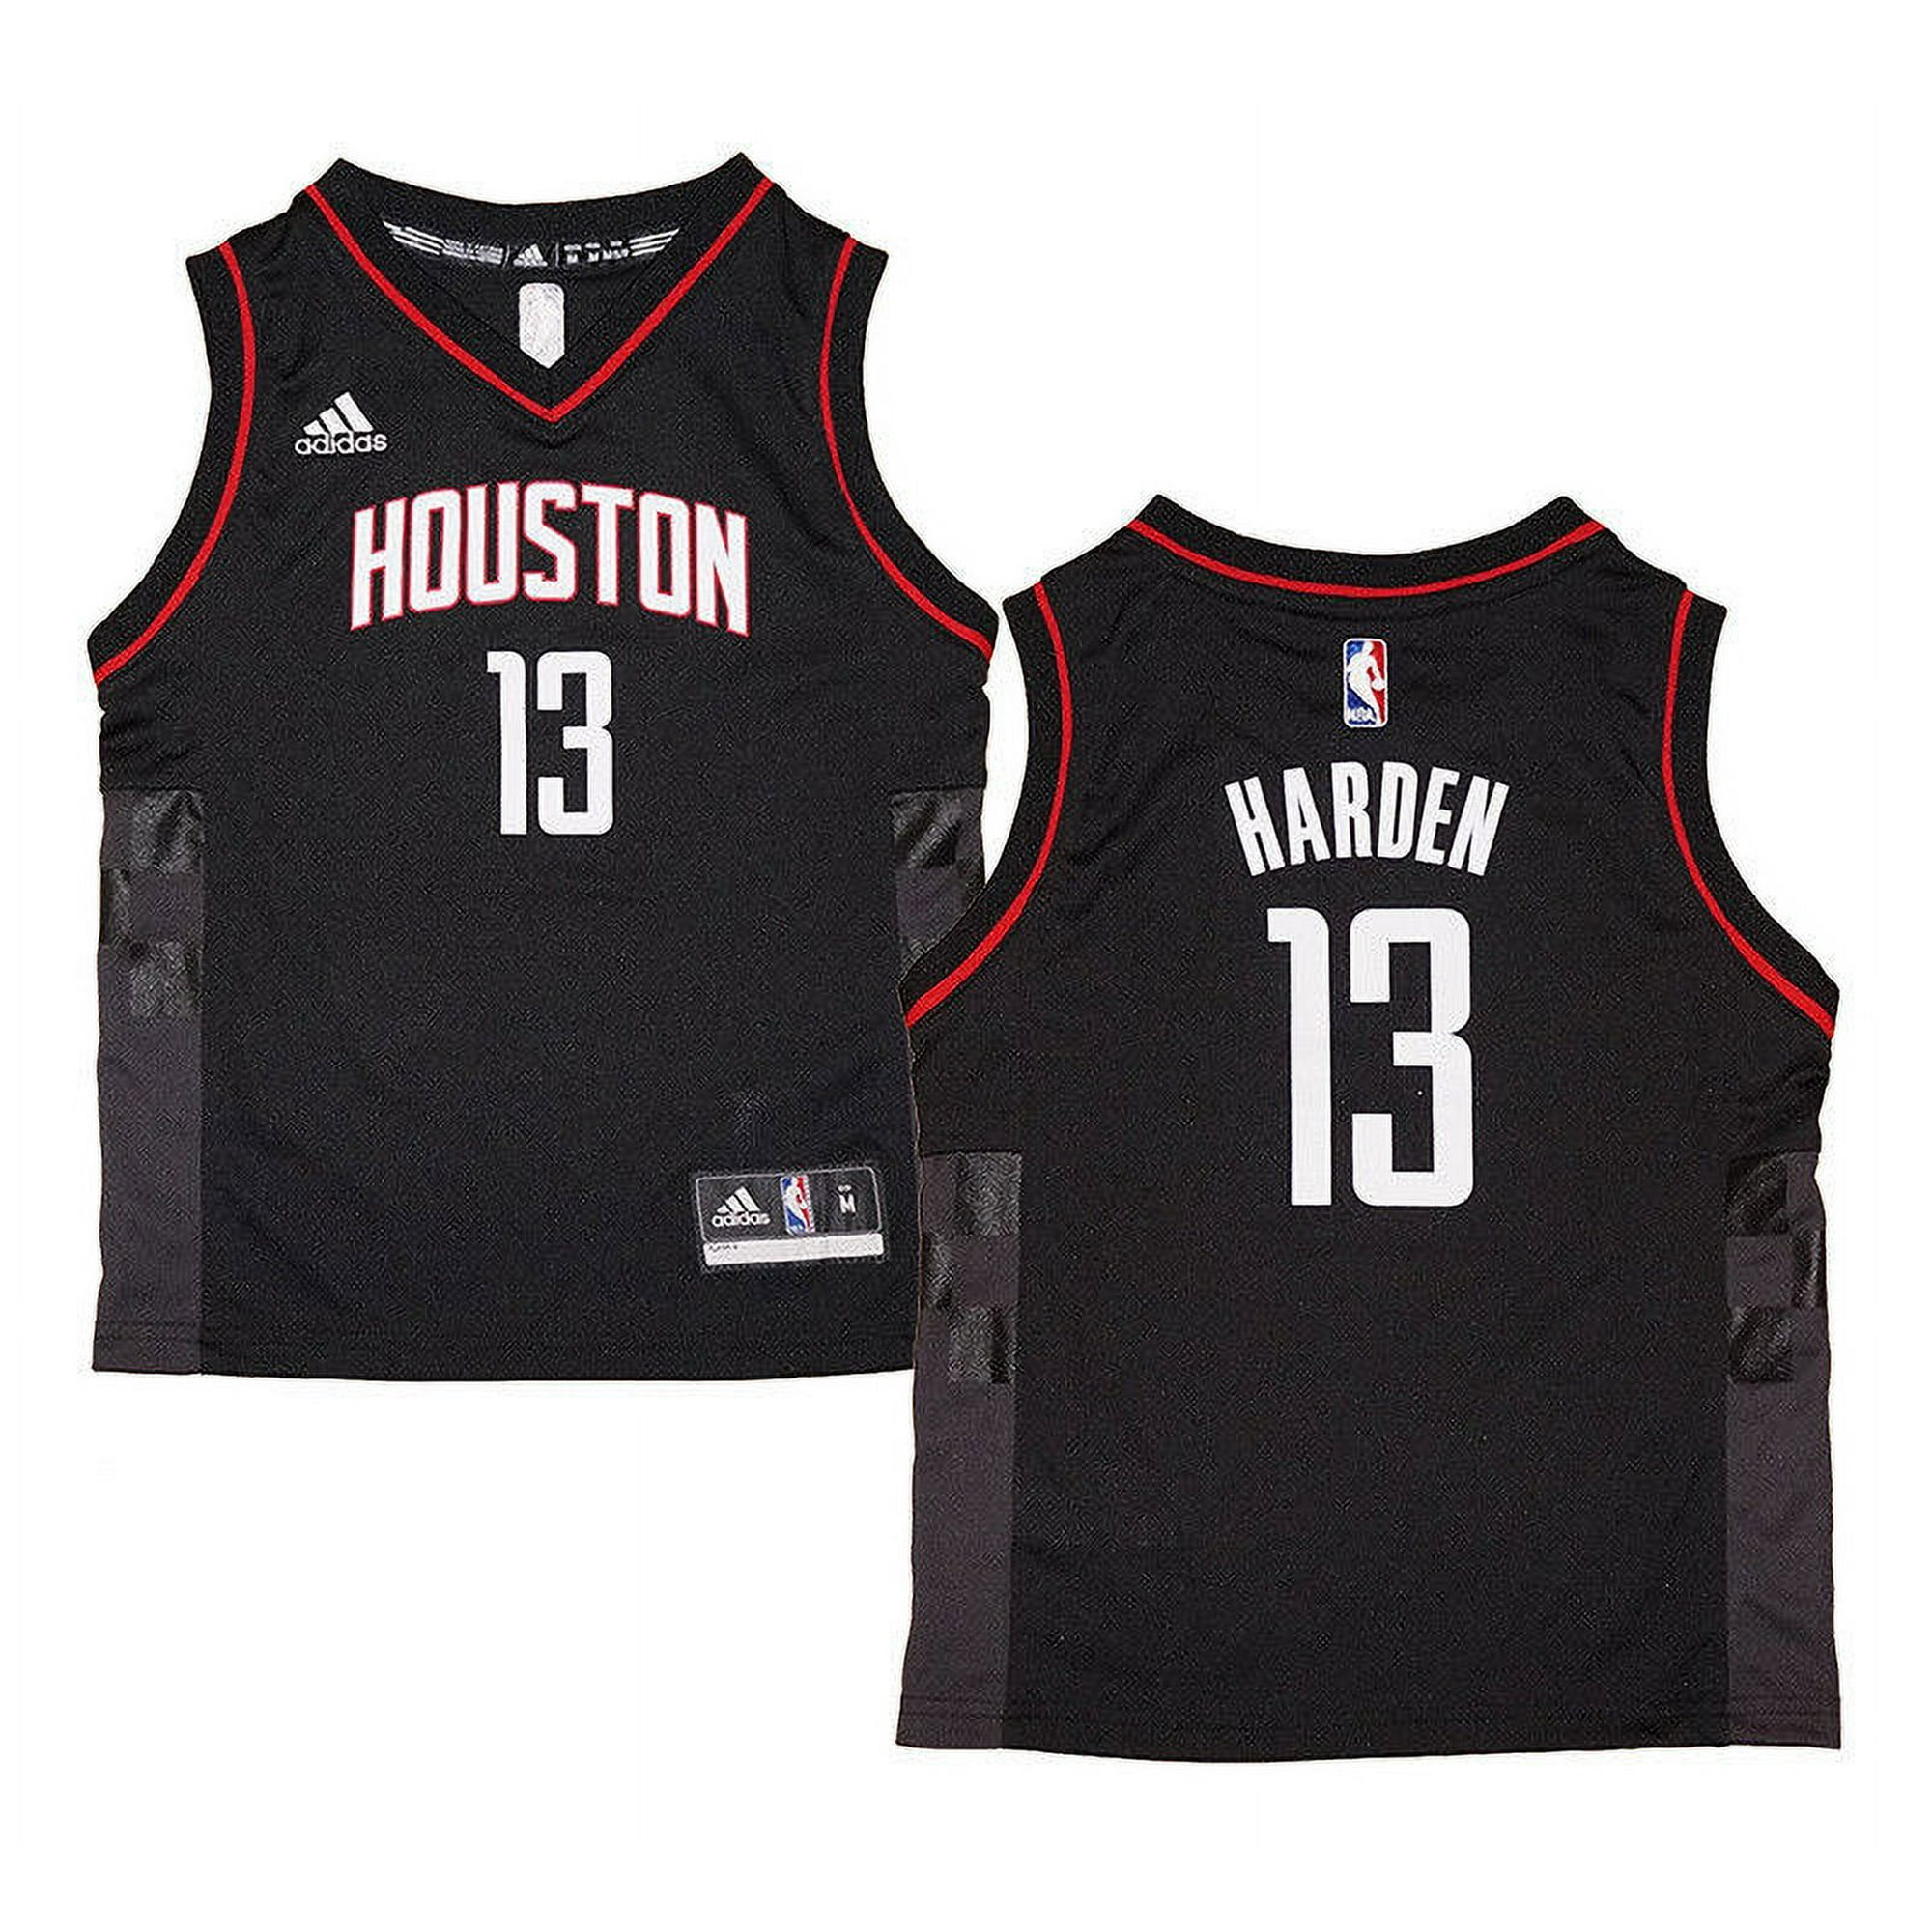 Adidas NBA Houston Rockets James Harden #13 Jersey Size M.